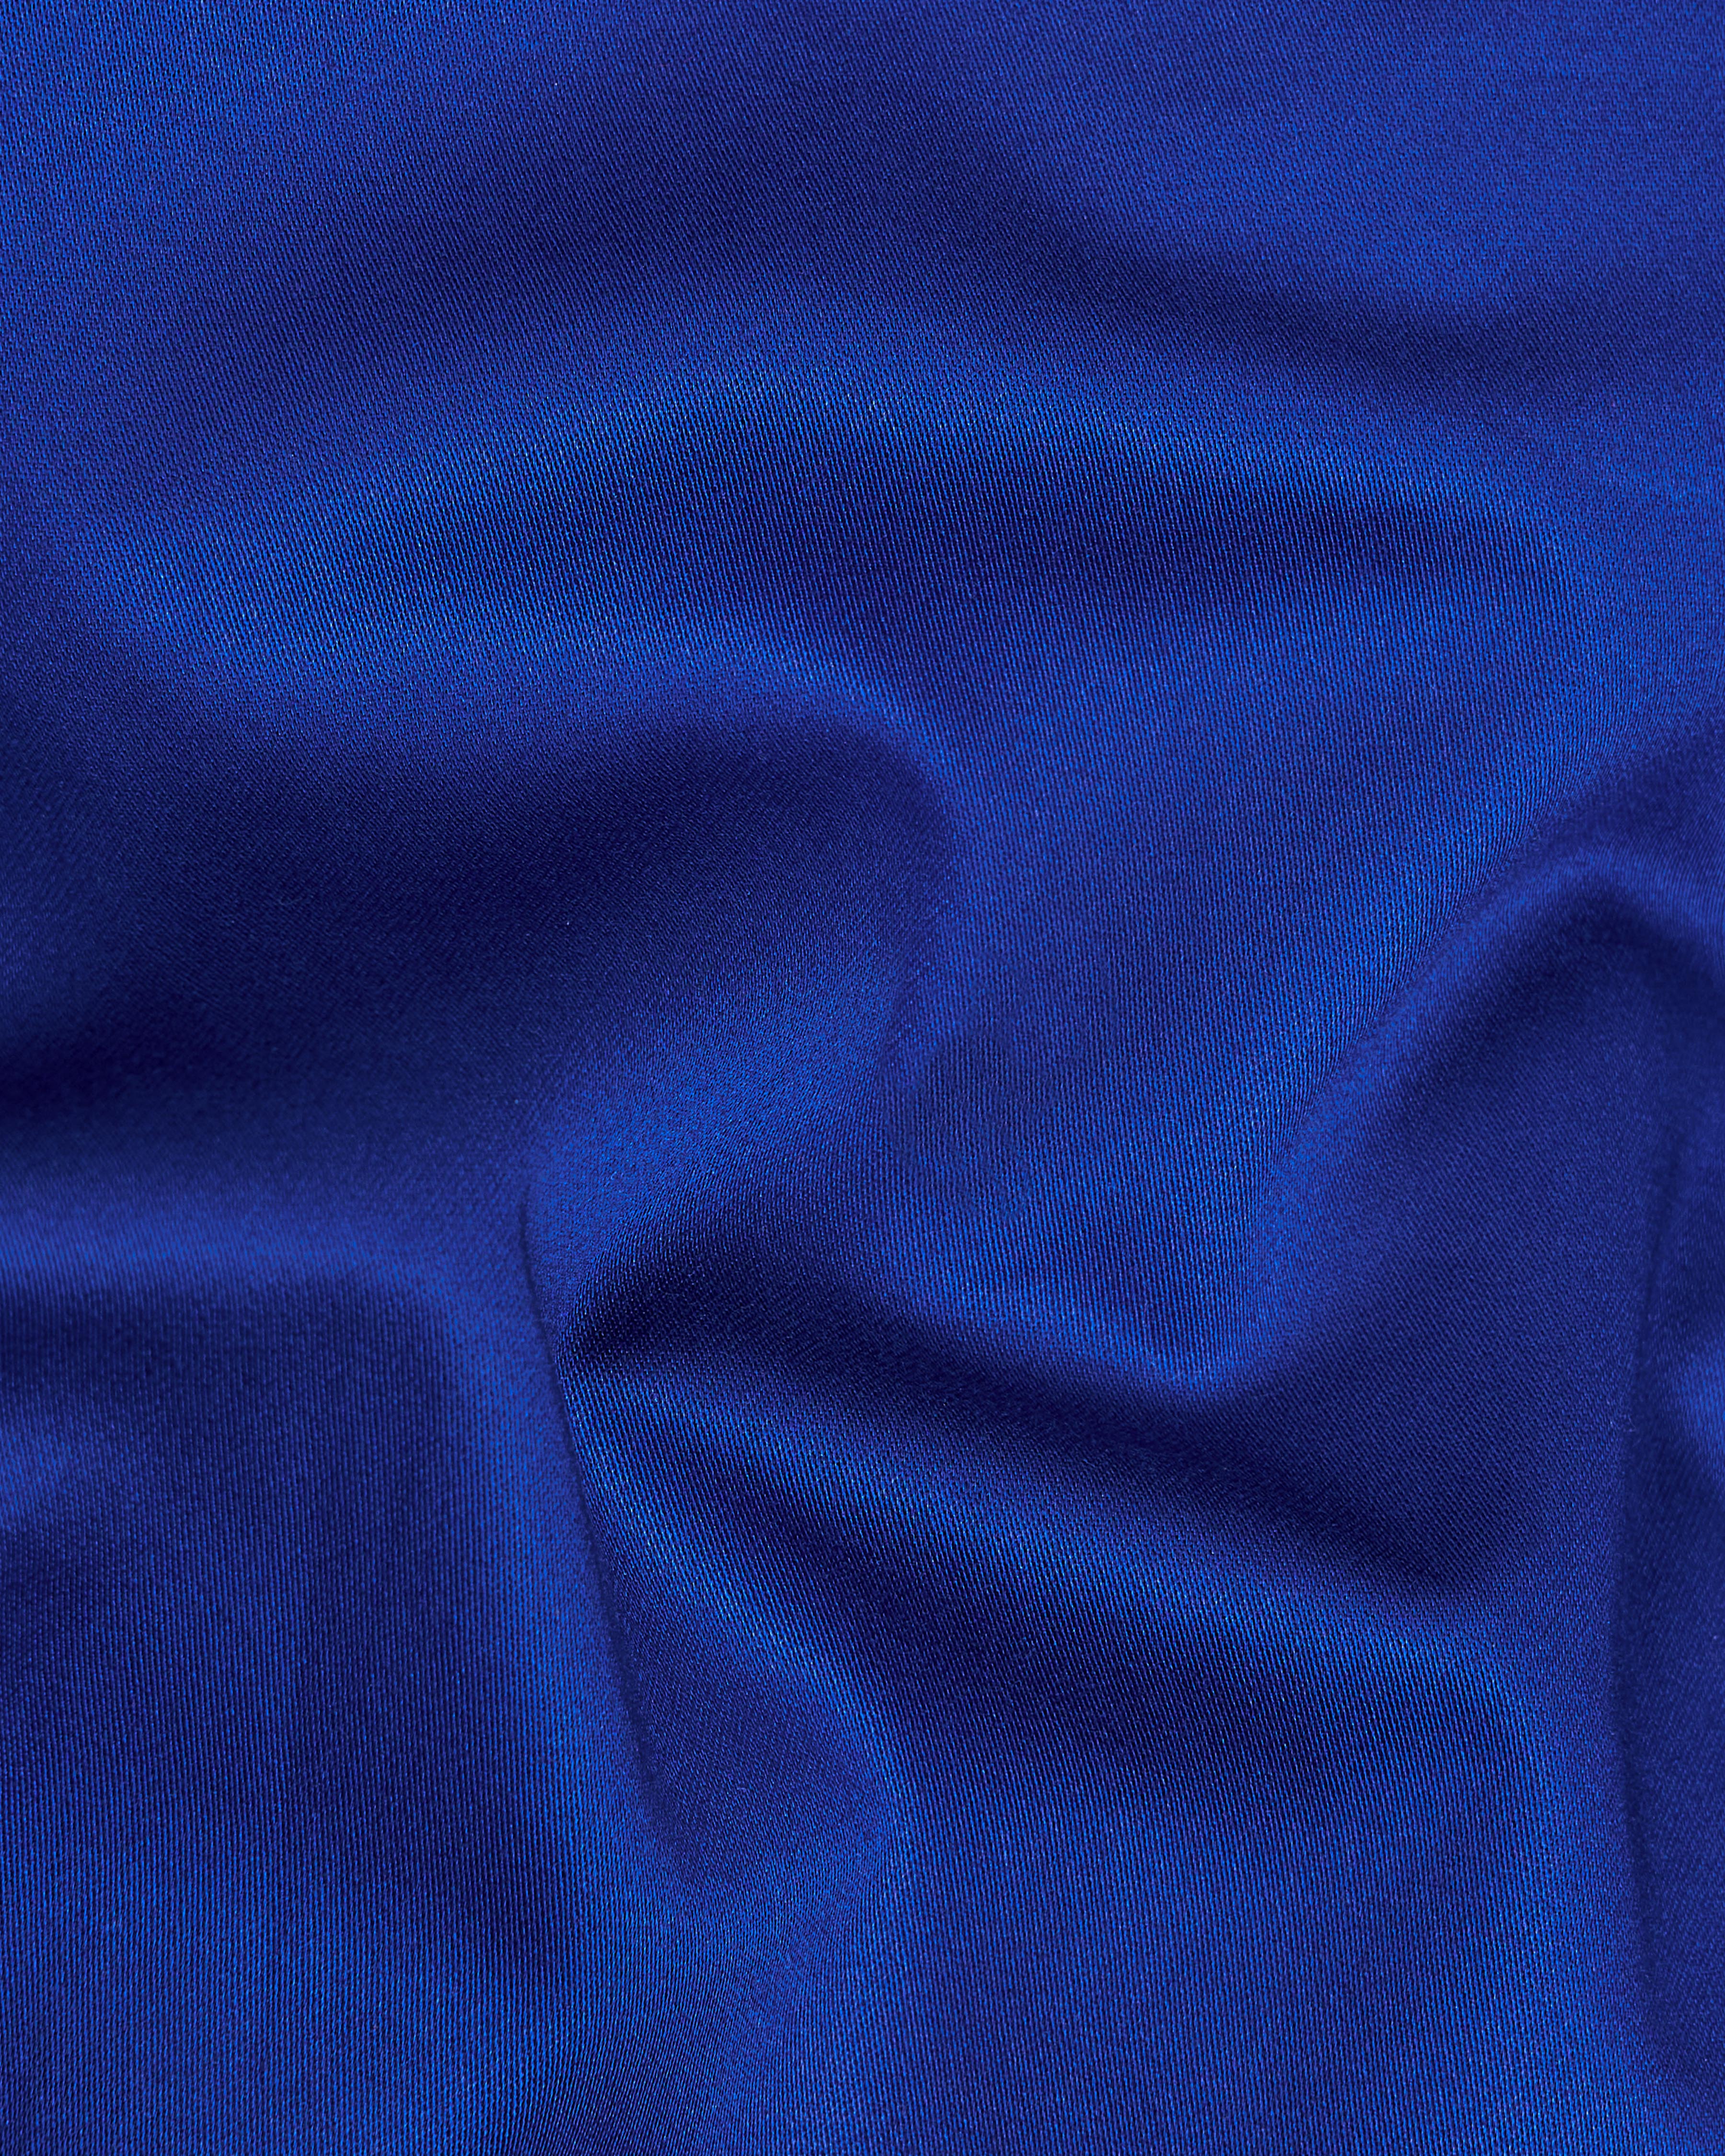 Catalina Blue Super Soft Premium Cotton Shirt 9330-38, 9330-H-38, 9330-39, 9330-H-39, 9330-40, 9330-H-40, 9330-42, 9330-H-42, 9330-44, 9330-H-44, 9330-46, 9330-H-46, 9330-48, 9330-H-48, 9330-50, 9330-H-50, 9330-52, 9330-H-52